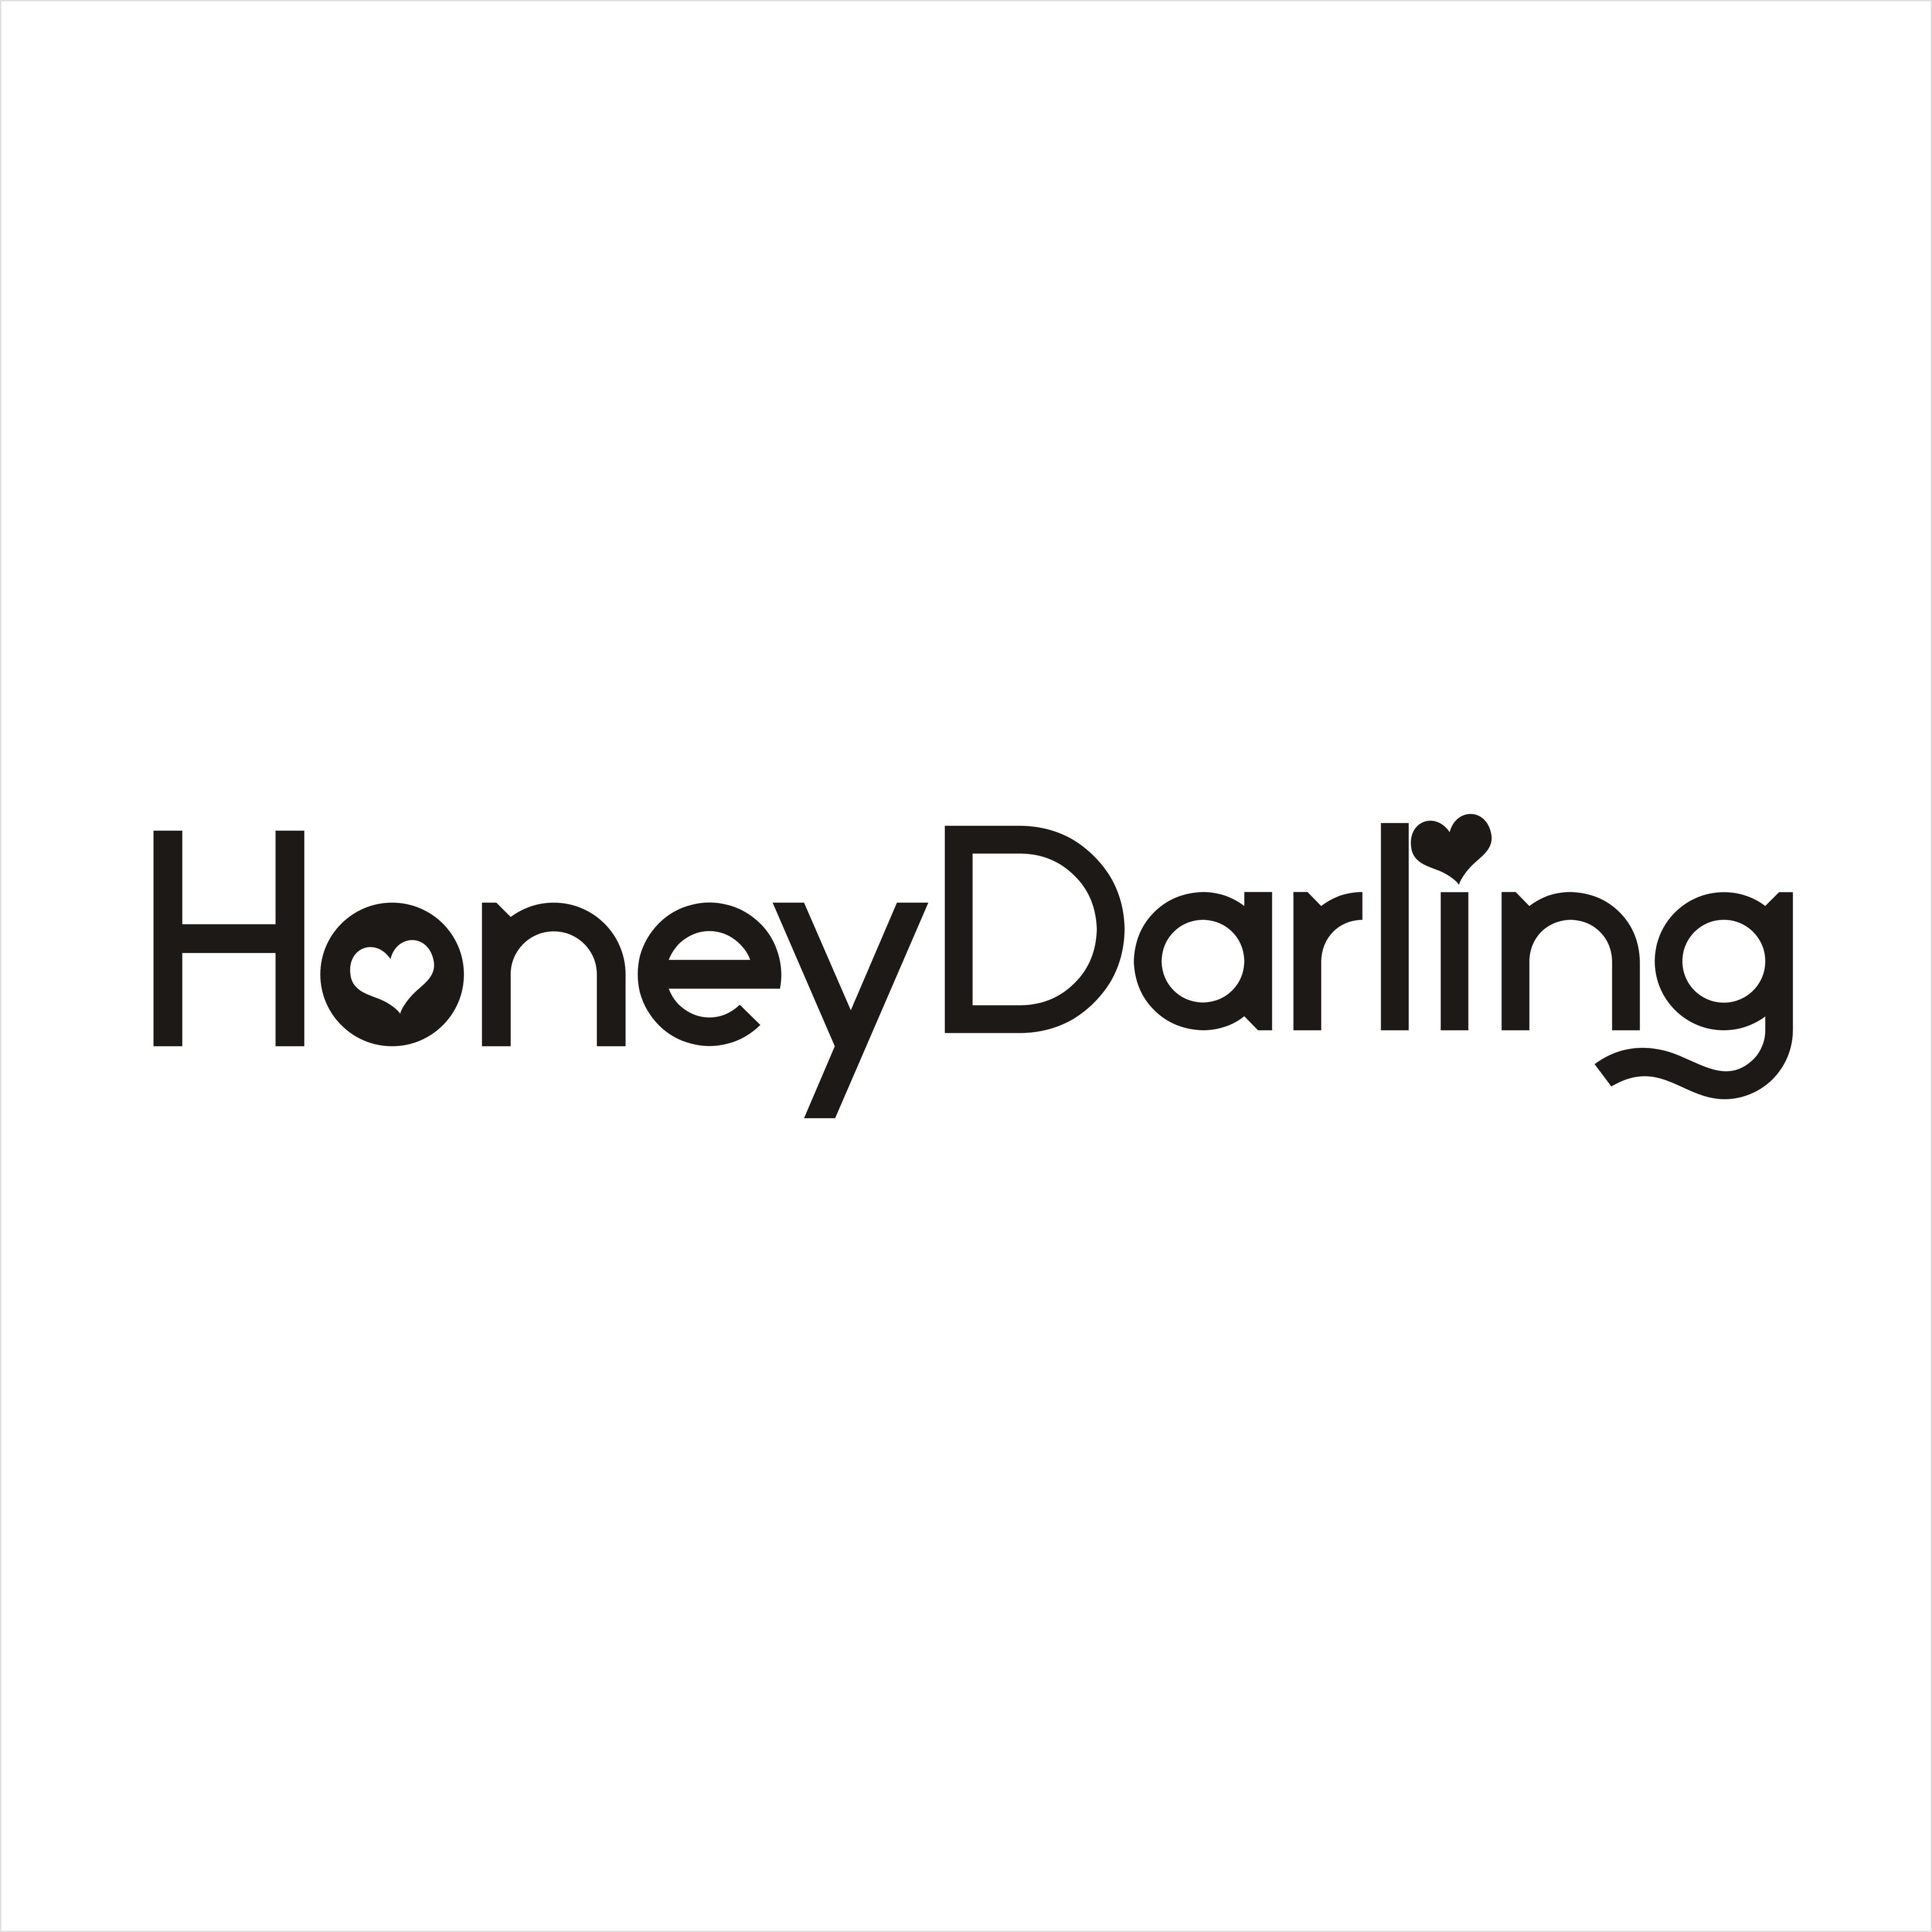 HoneyDarling